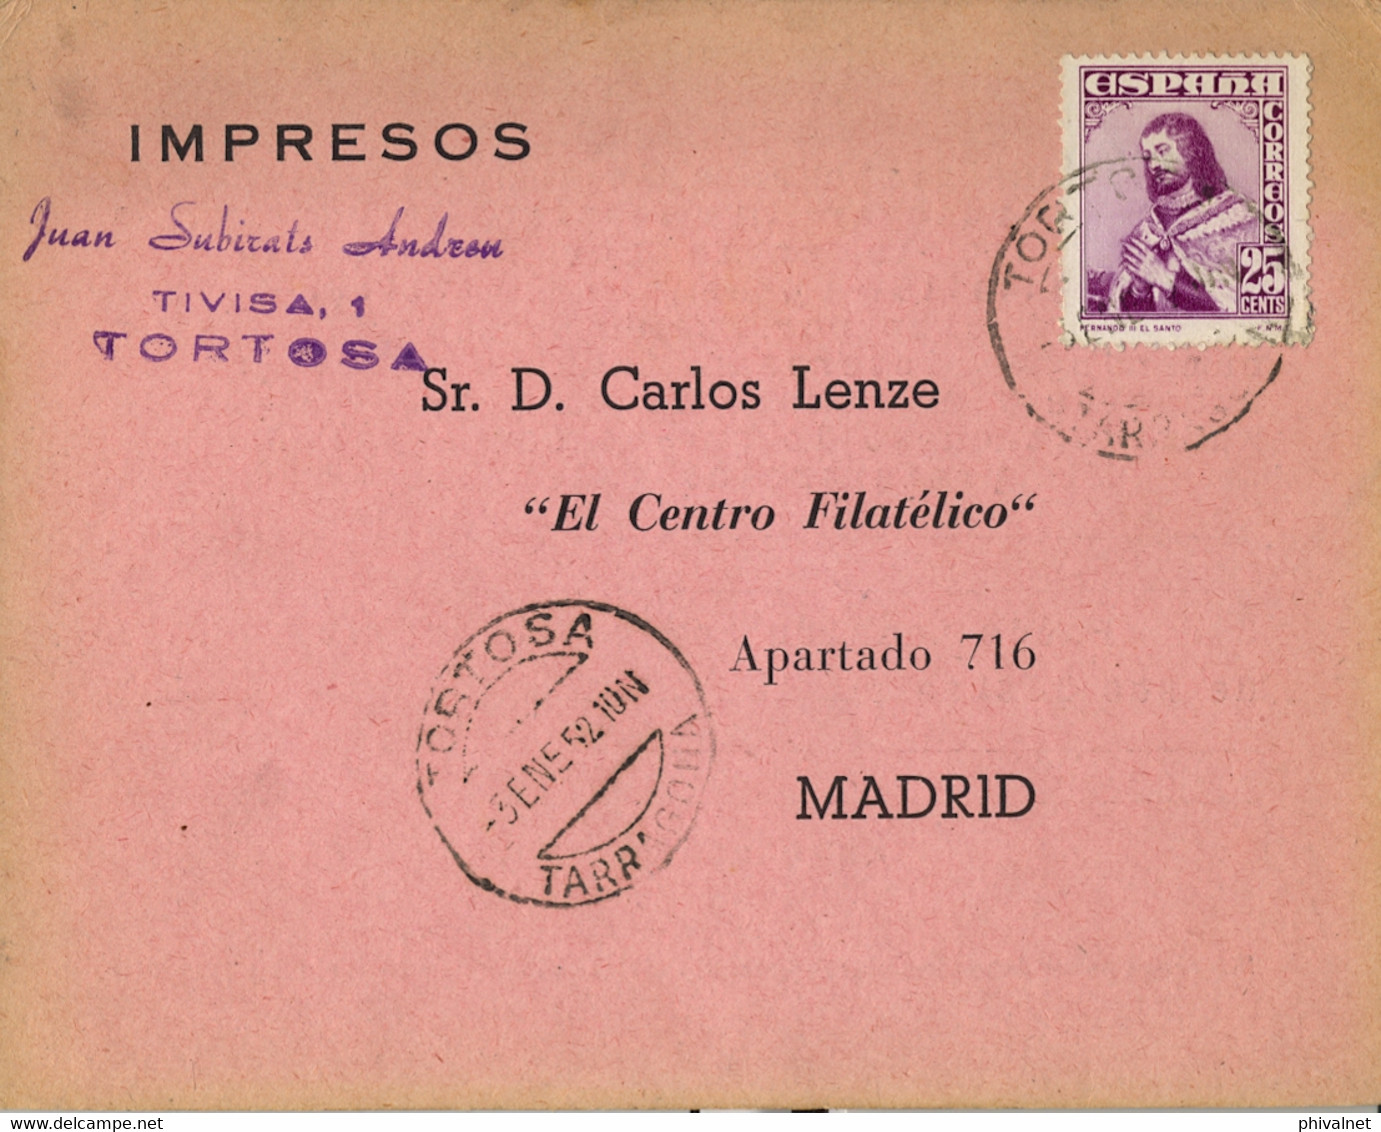 1952 TARRAGONA , TARJETA POSTAL CIRCULADA , IMPRESOS , TORTOSA -MADRID , LLEGADA - Storia Postale